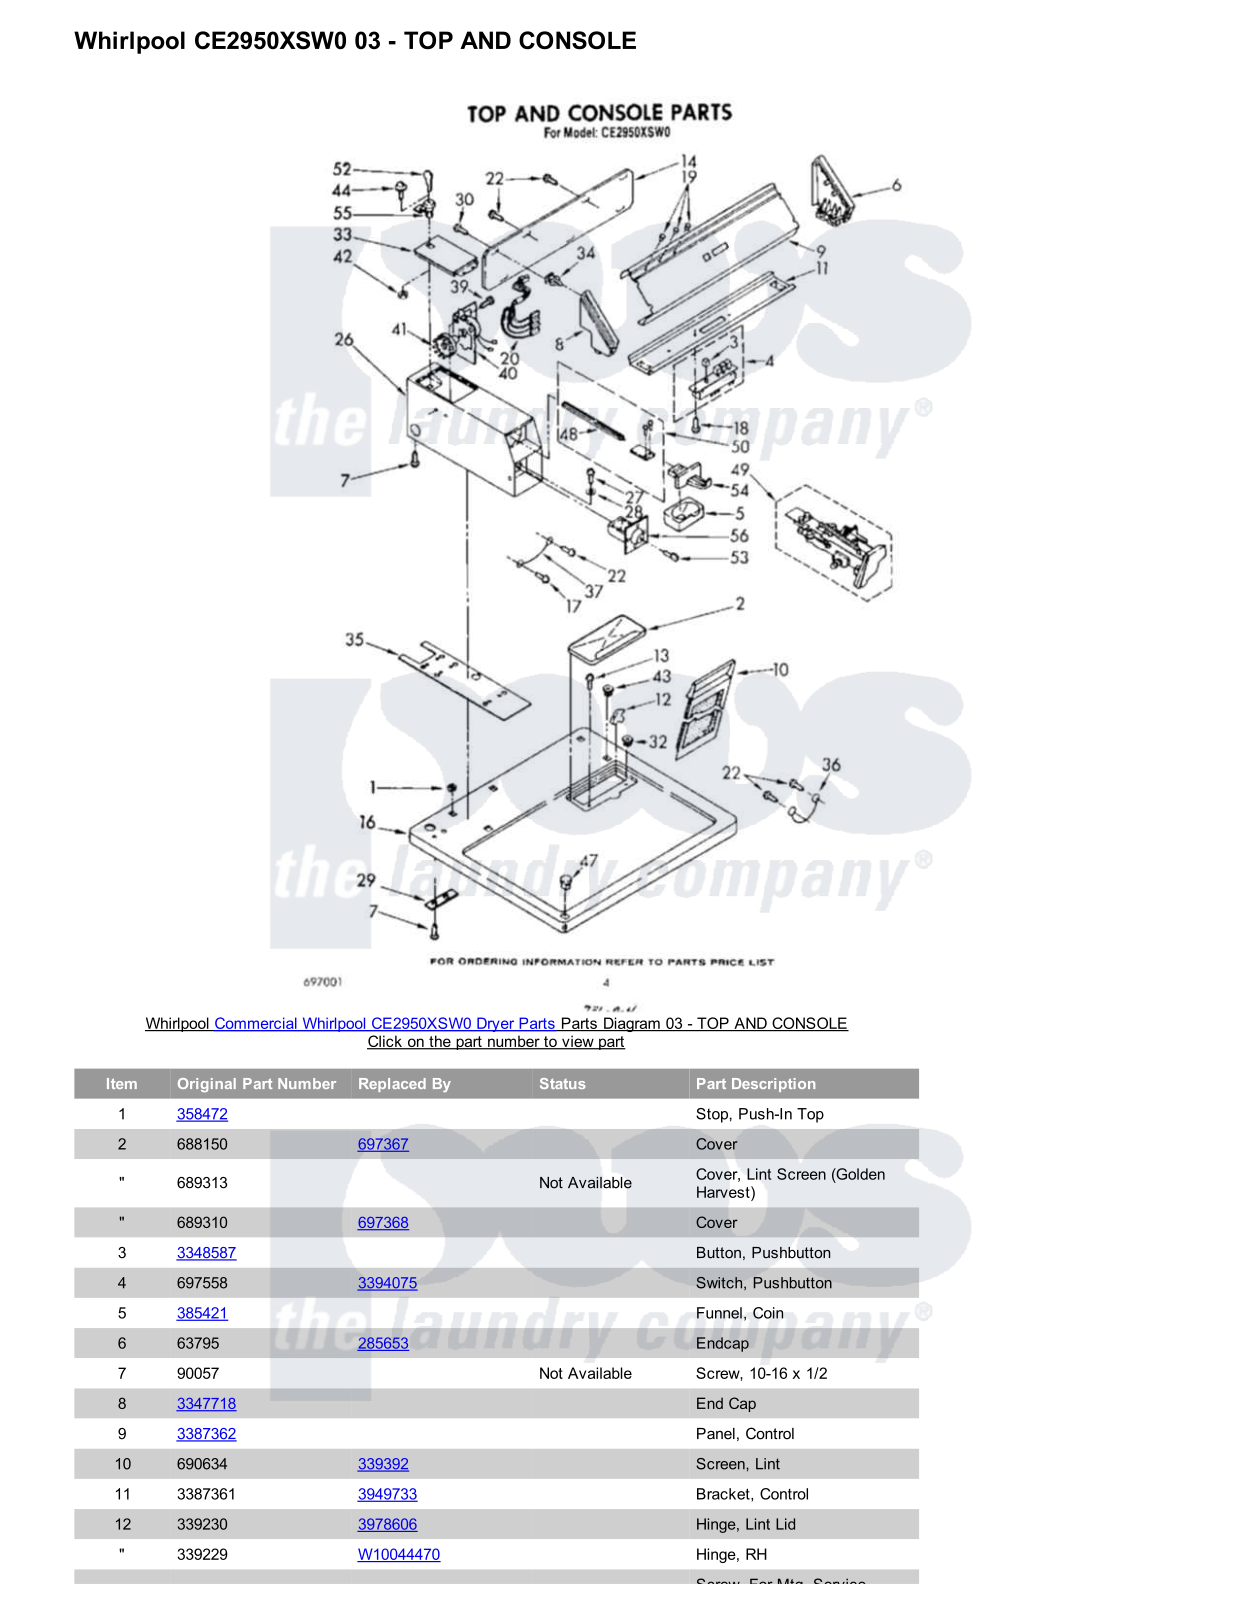 Whirlpool CE2950XSW0 Parts Diagram